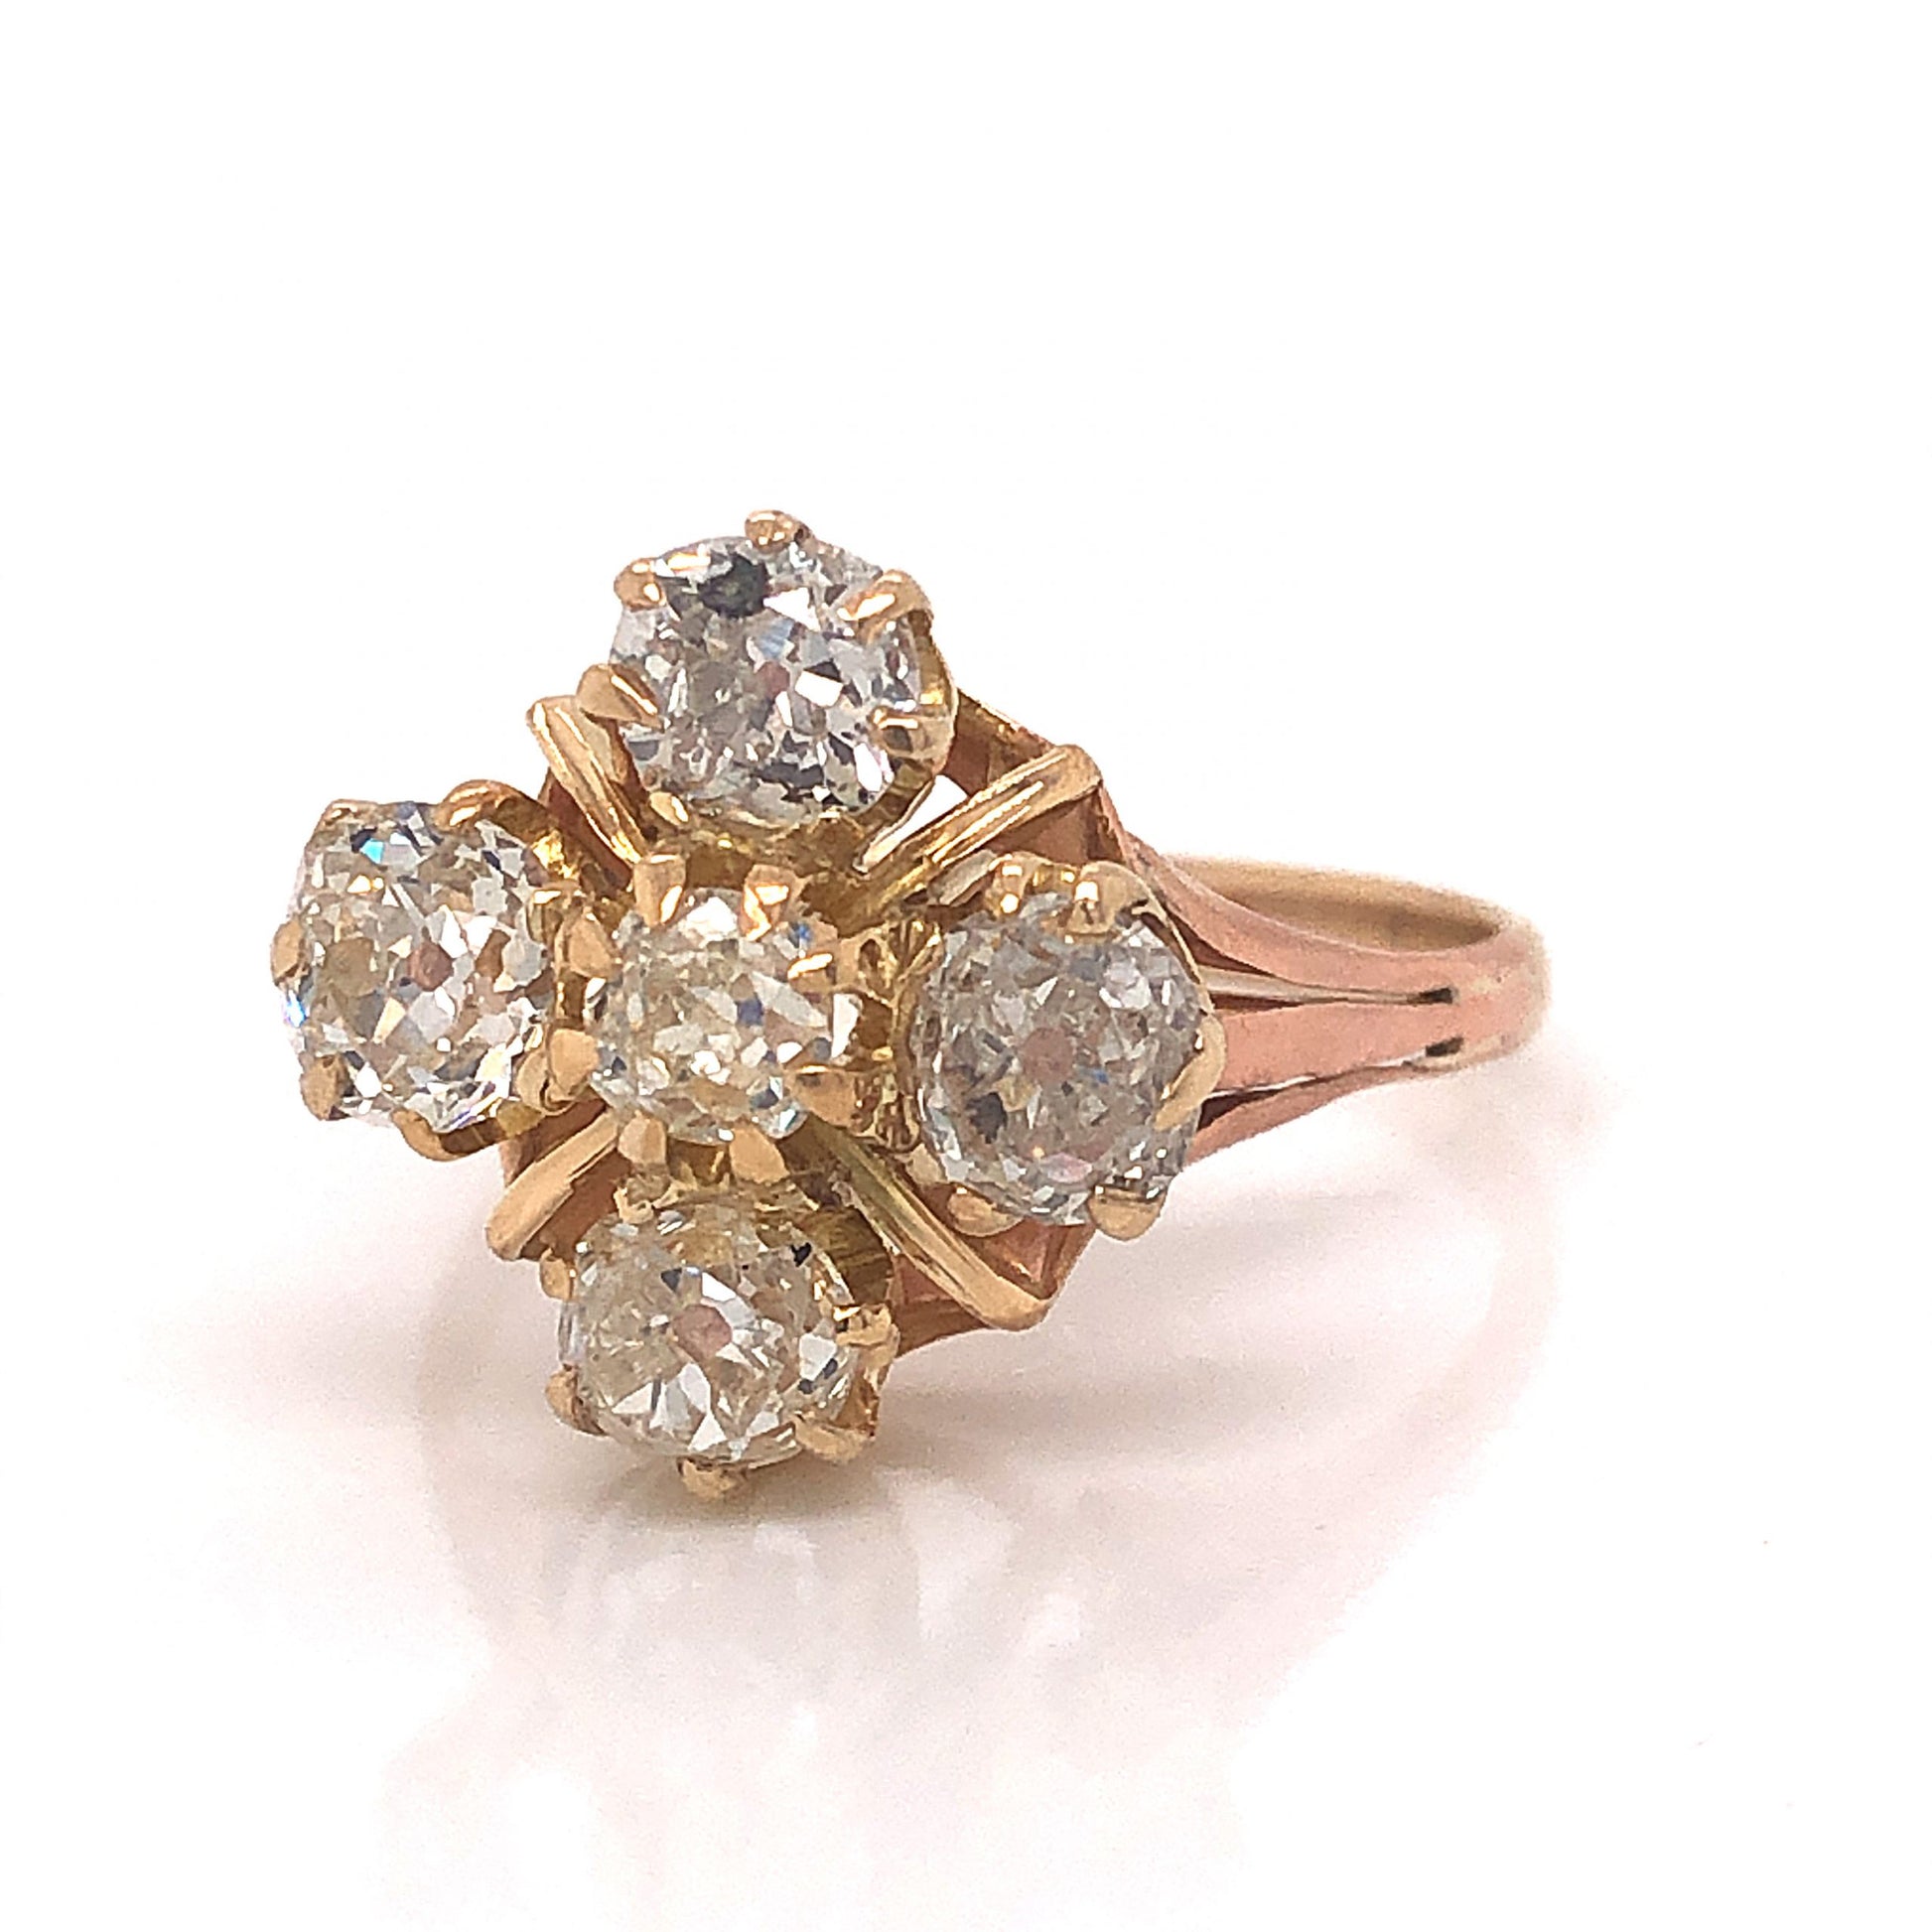 Victorian Five Diamond Cluster Ring in 14k Yellow GoldComposition: 14 Karat Yellow Gold/14 Karat Rose Gold Ring Size: 8 Total Diamond Weight: 2.45ct Total Gram Weight: 5.4 g